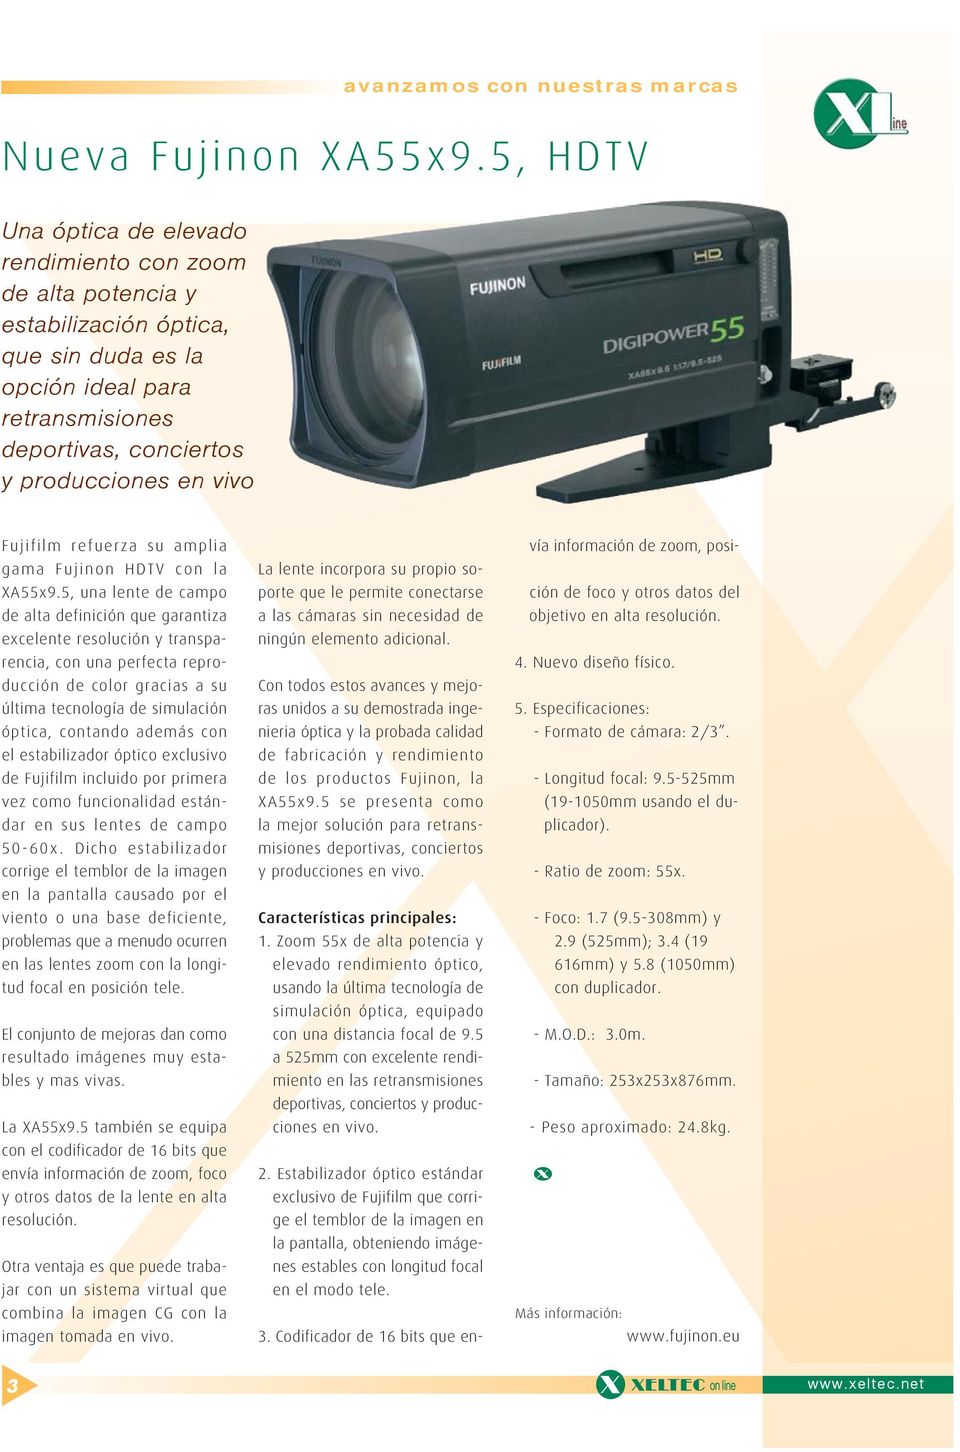 Fujifilm refuerza su amplia gama Fujinon HDTV con la XA55x9.